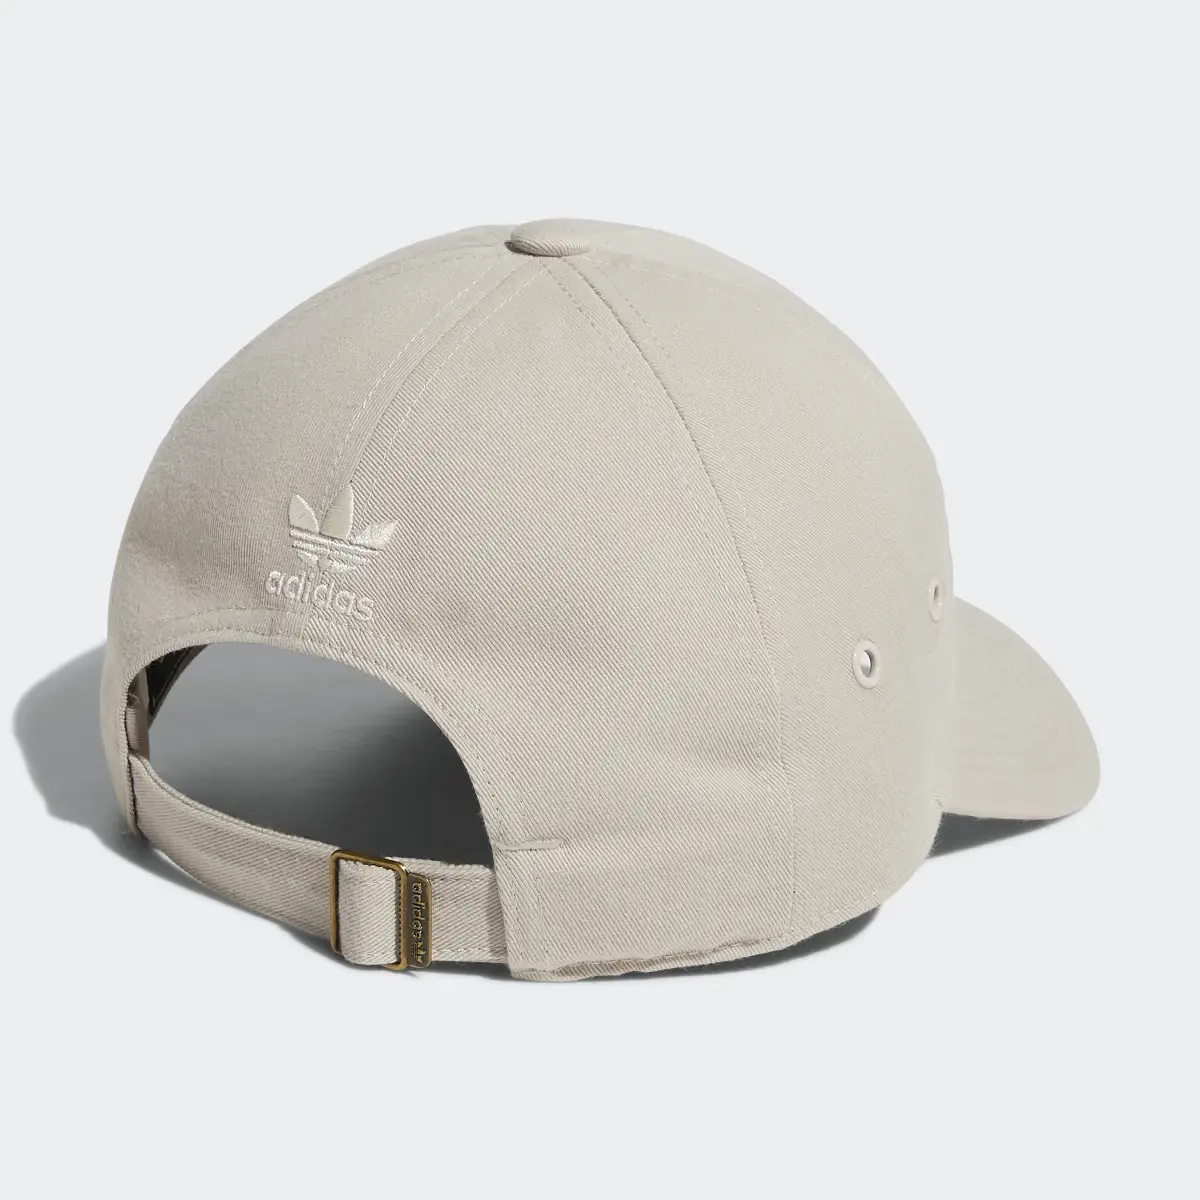 Adidas Union Strapback Hat. 3